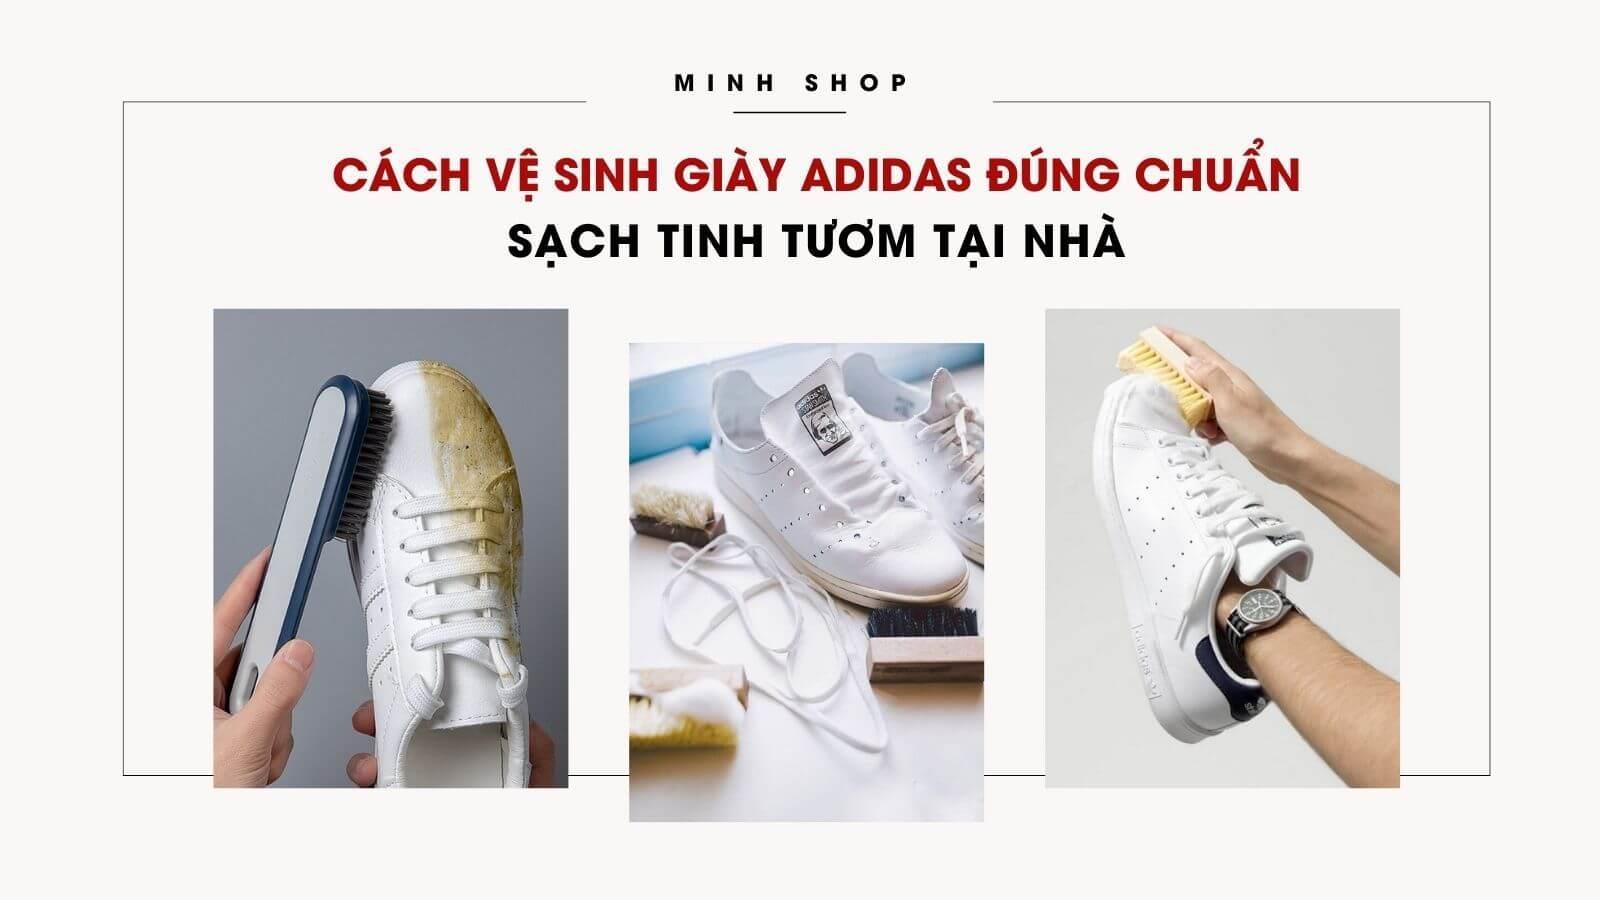 cach-ve-sinh-giay-adidas-dung-chuan-sach-tinh-tuom-tai-nha